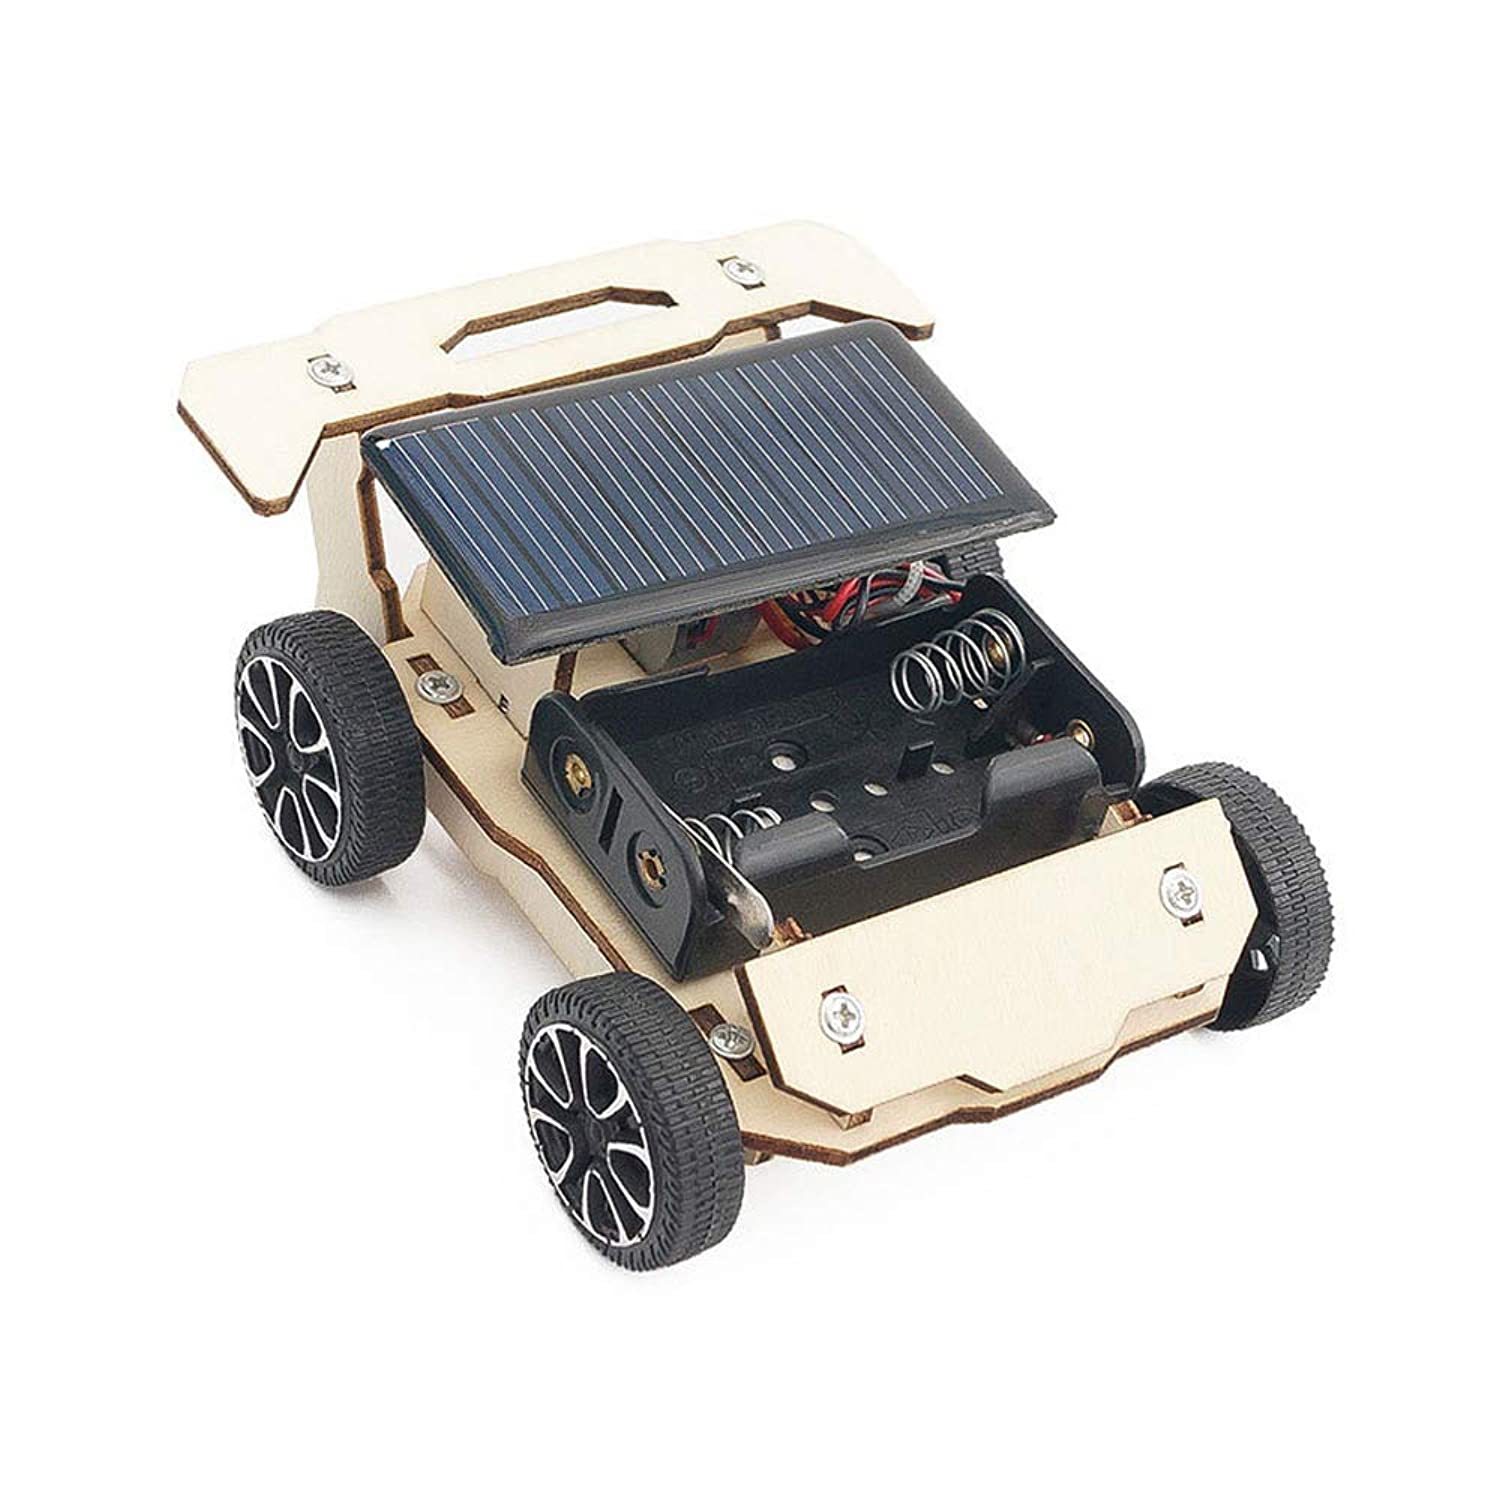 Diy Science Handmade Solar Toy Series Kits, Multiple Styles Of Stem Ed